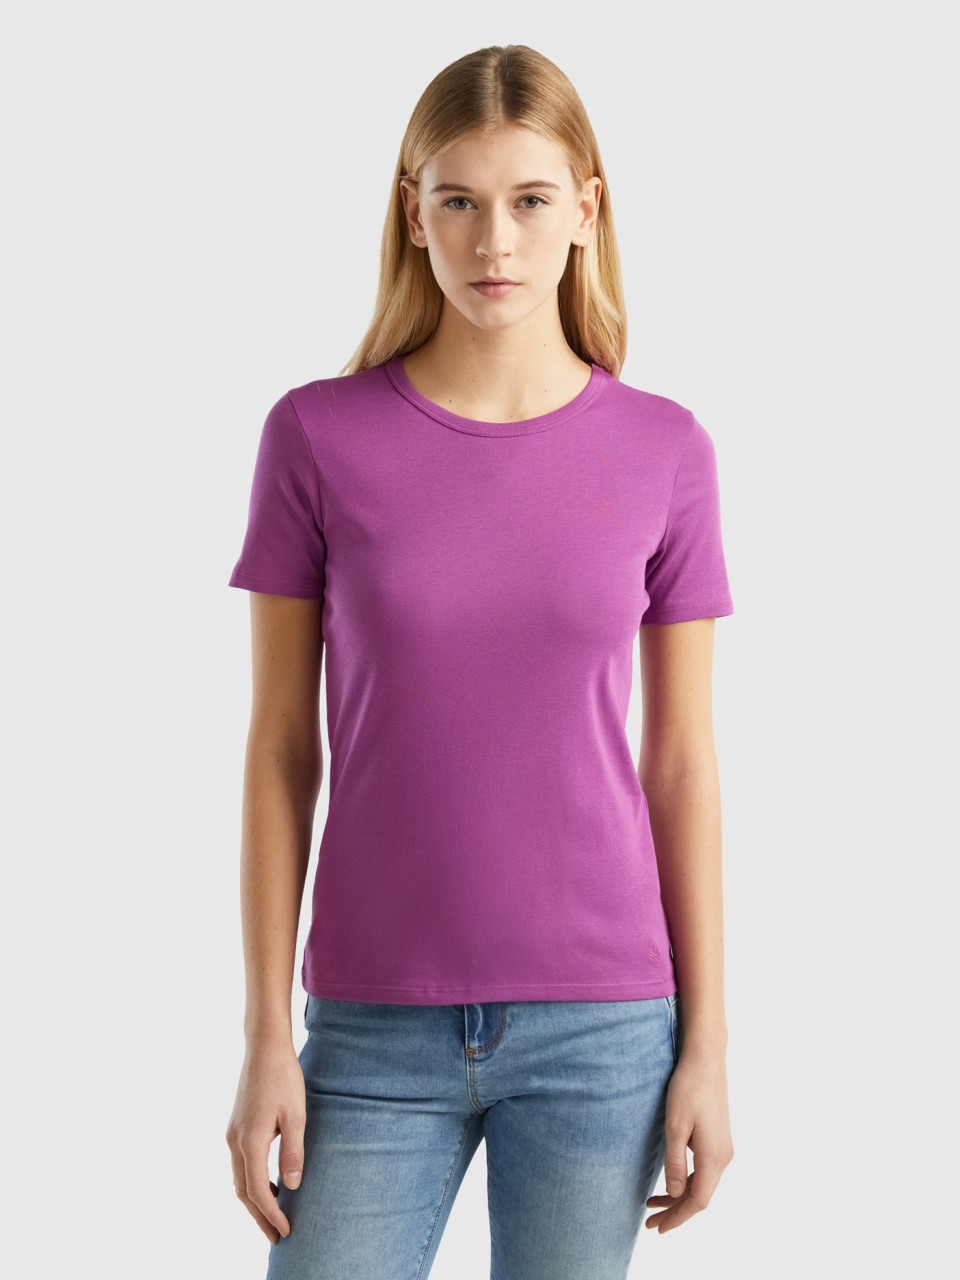 Benetton, Camiseta De Algodón De Fibra Larga, Morado, Mujer